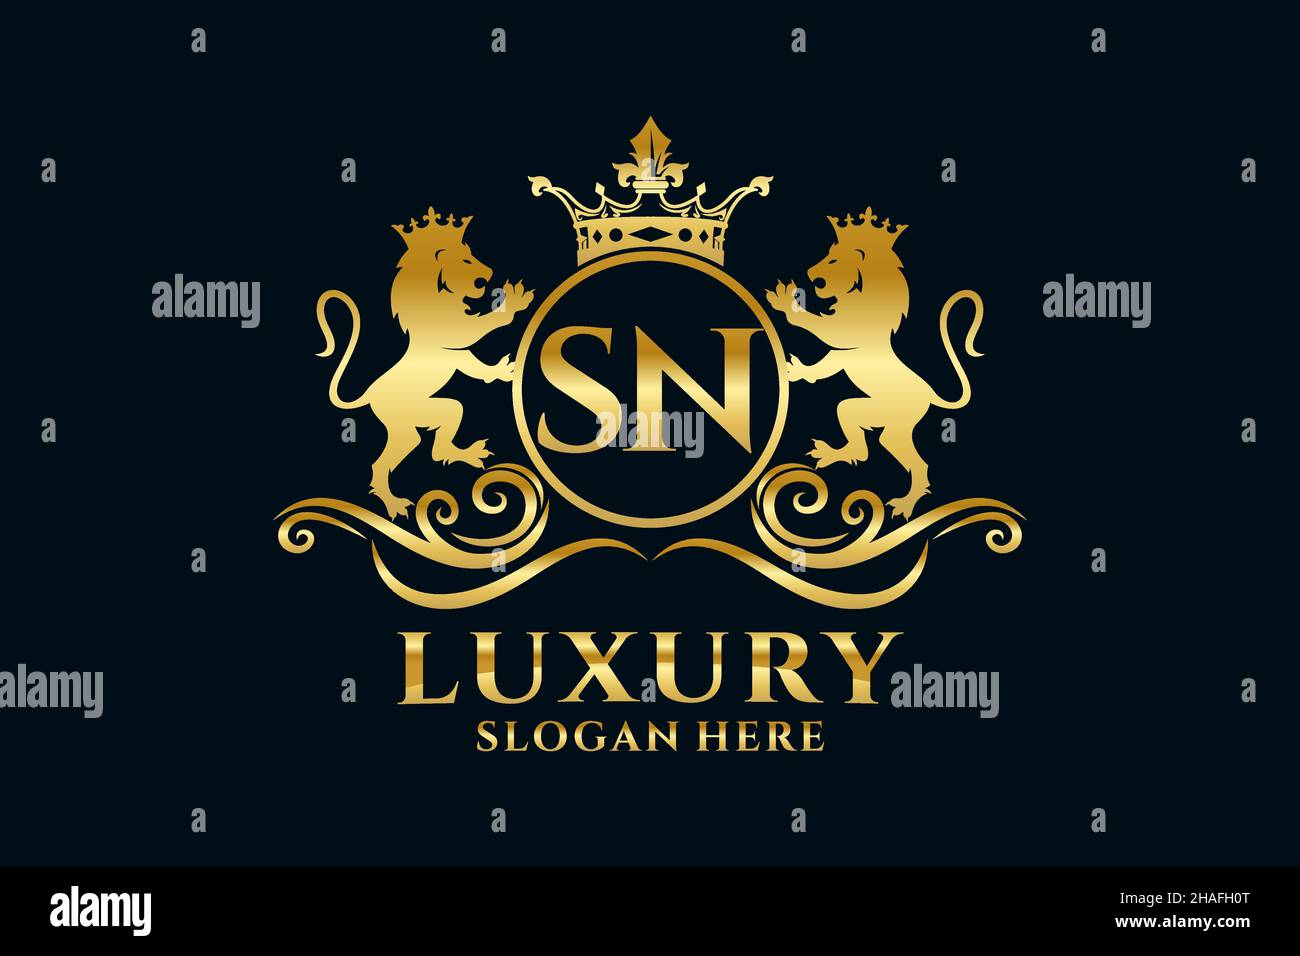 SN Letter Lion Royal Luxury Logo-Vorlage in Vektorgrafik für luxuriöse Branding-Projekte und andere Vektorgrafik. Stock Vektor